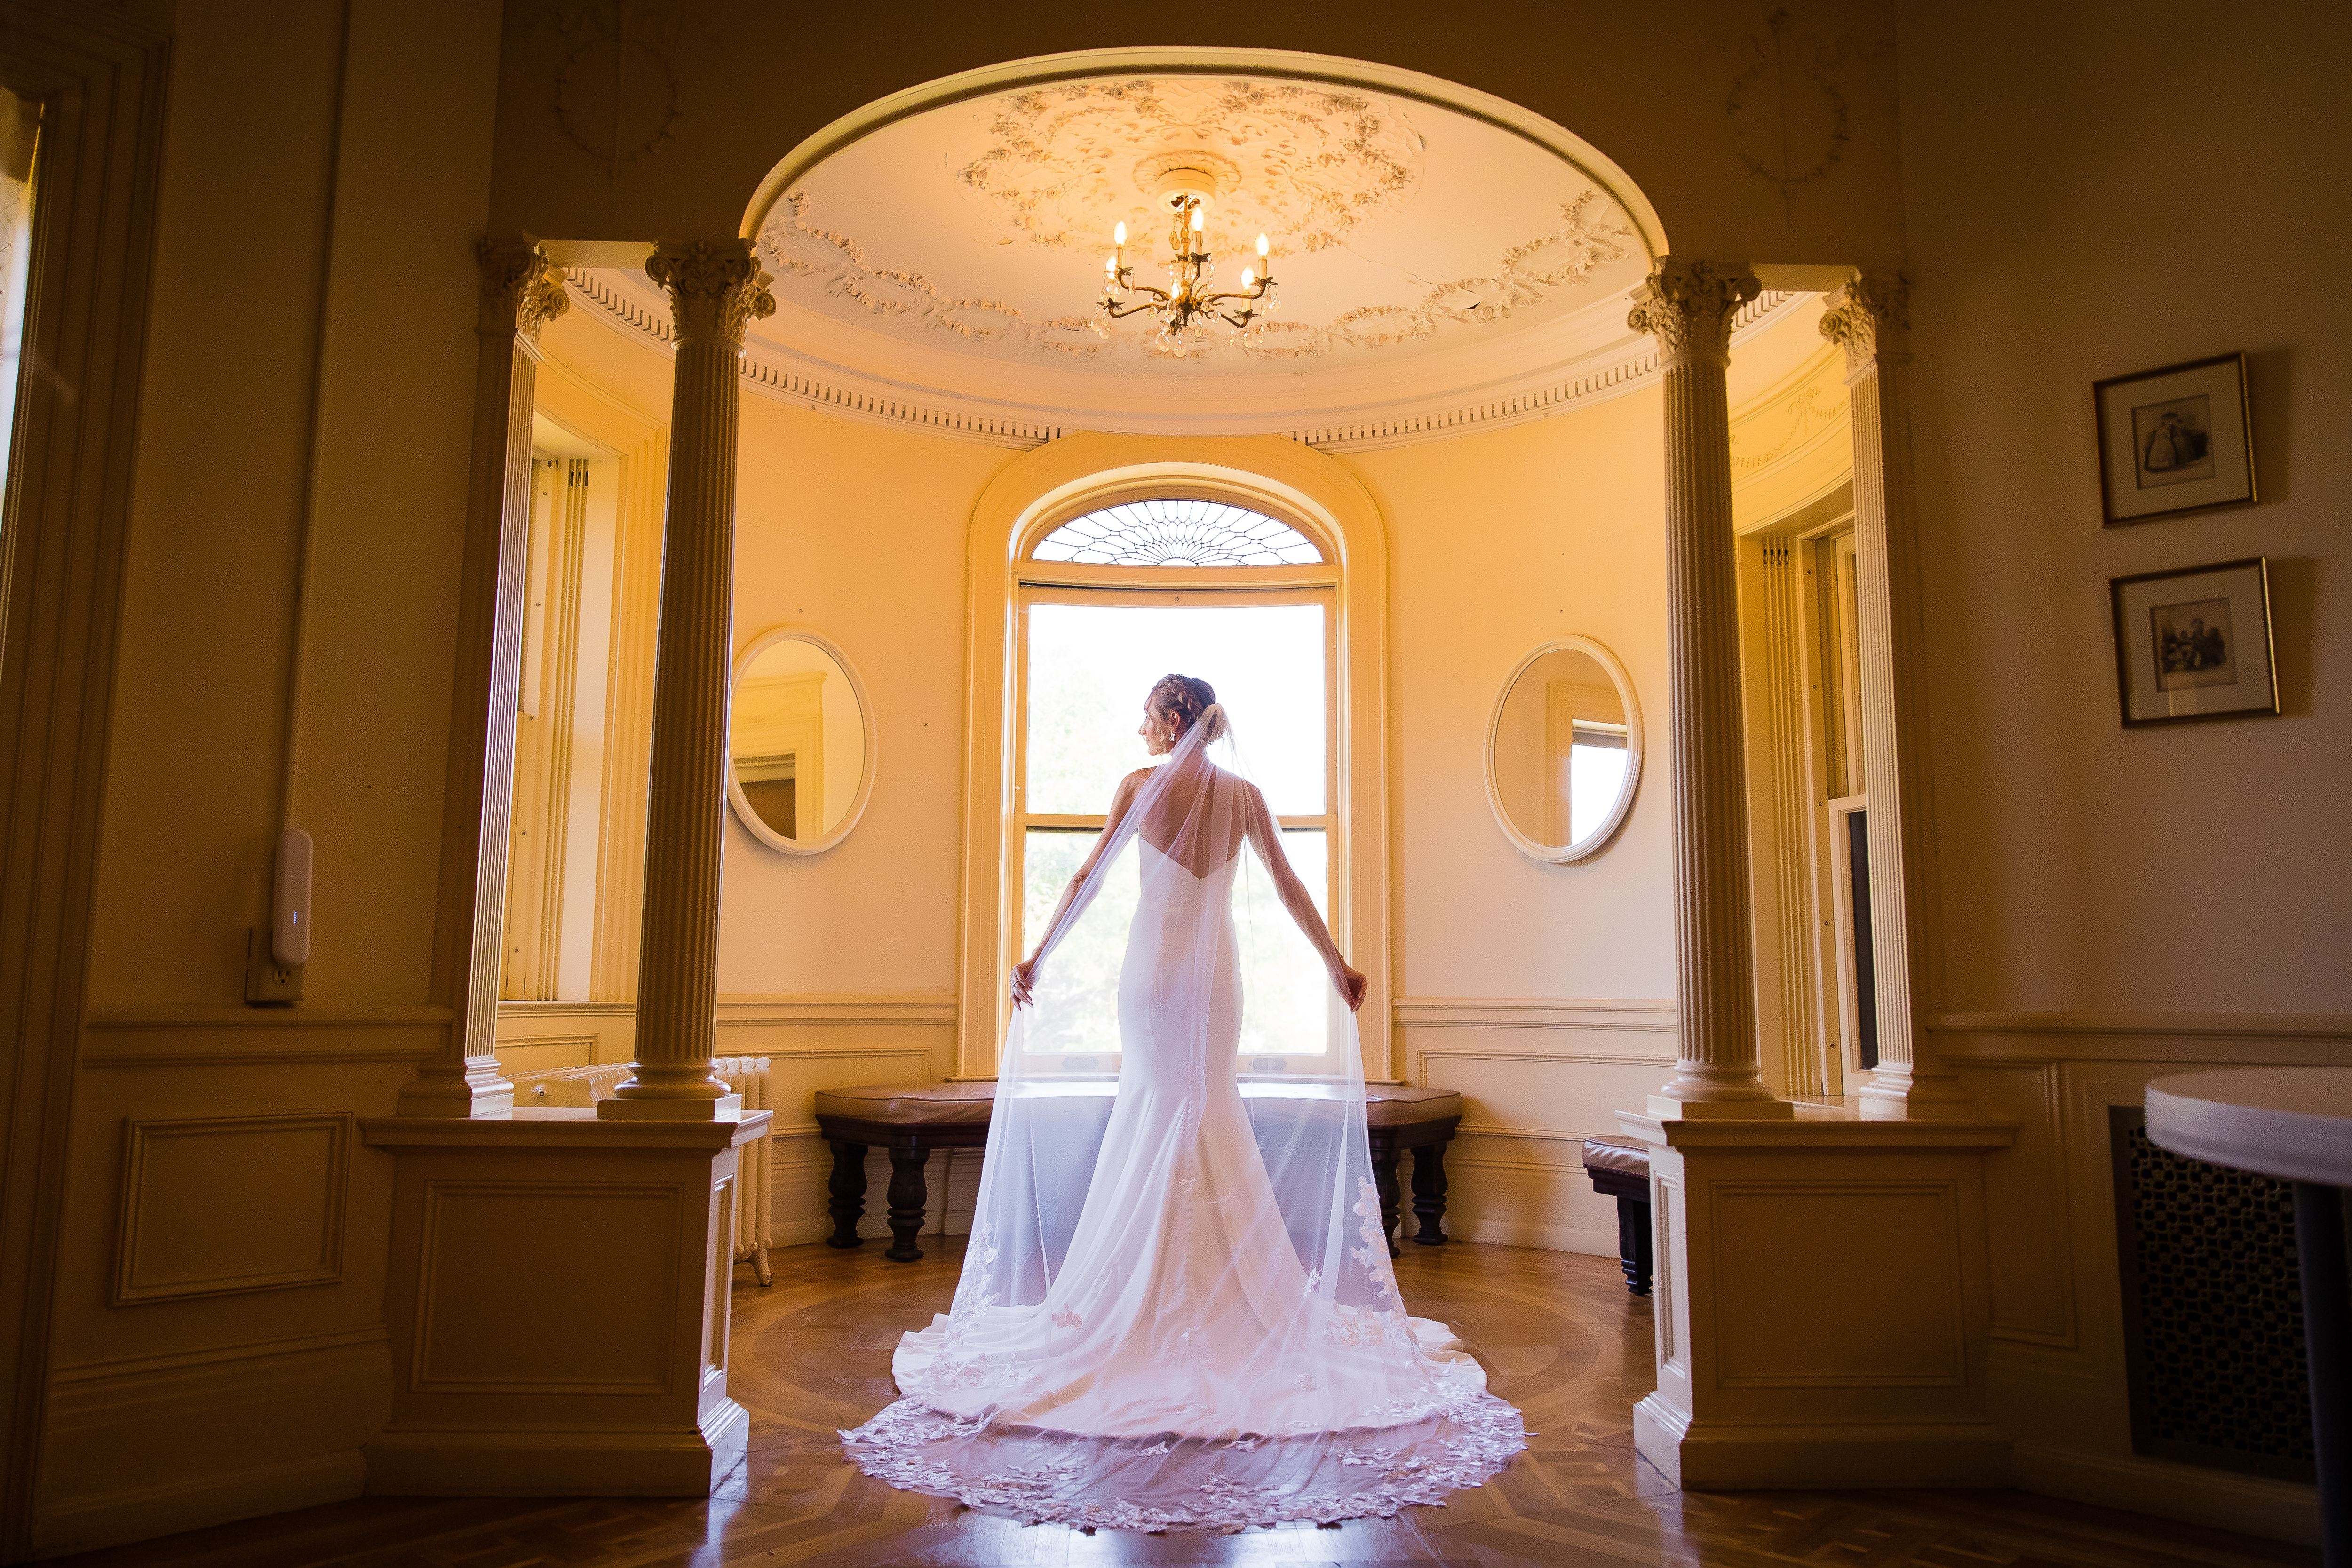 Bride wearing wedding dress poses in dressing room at Kilmer Mansion